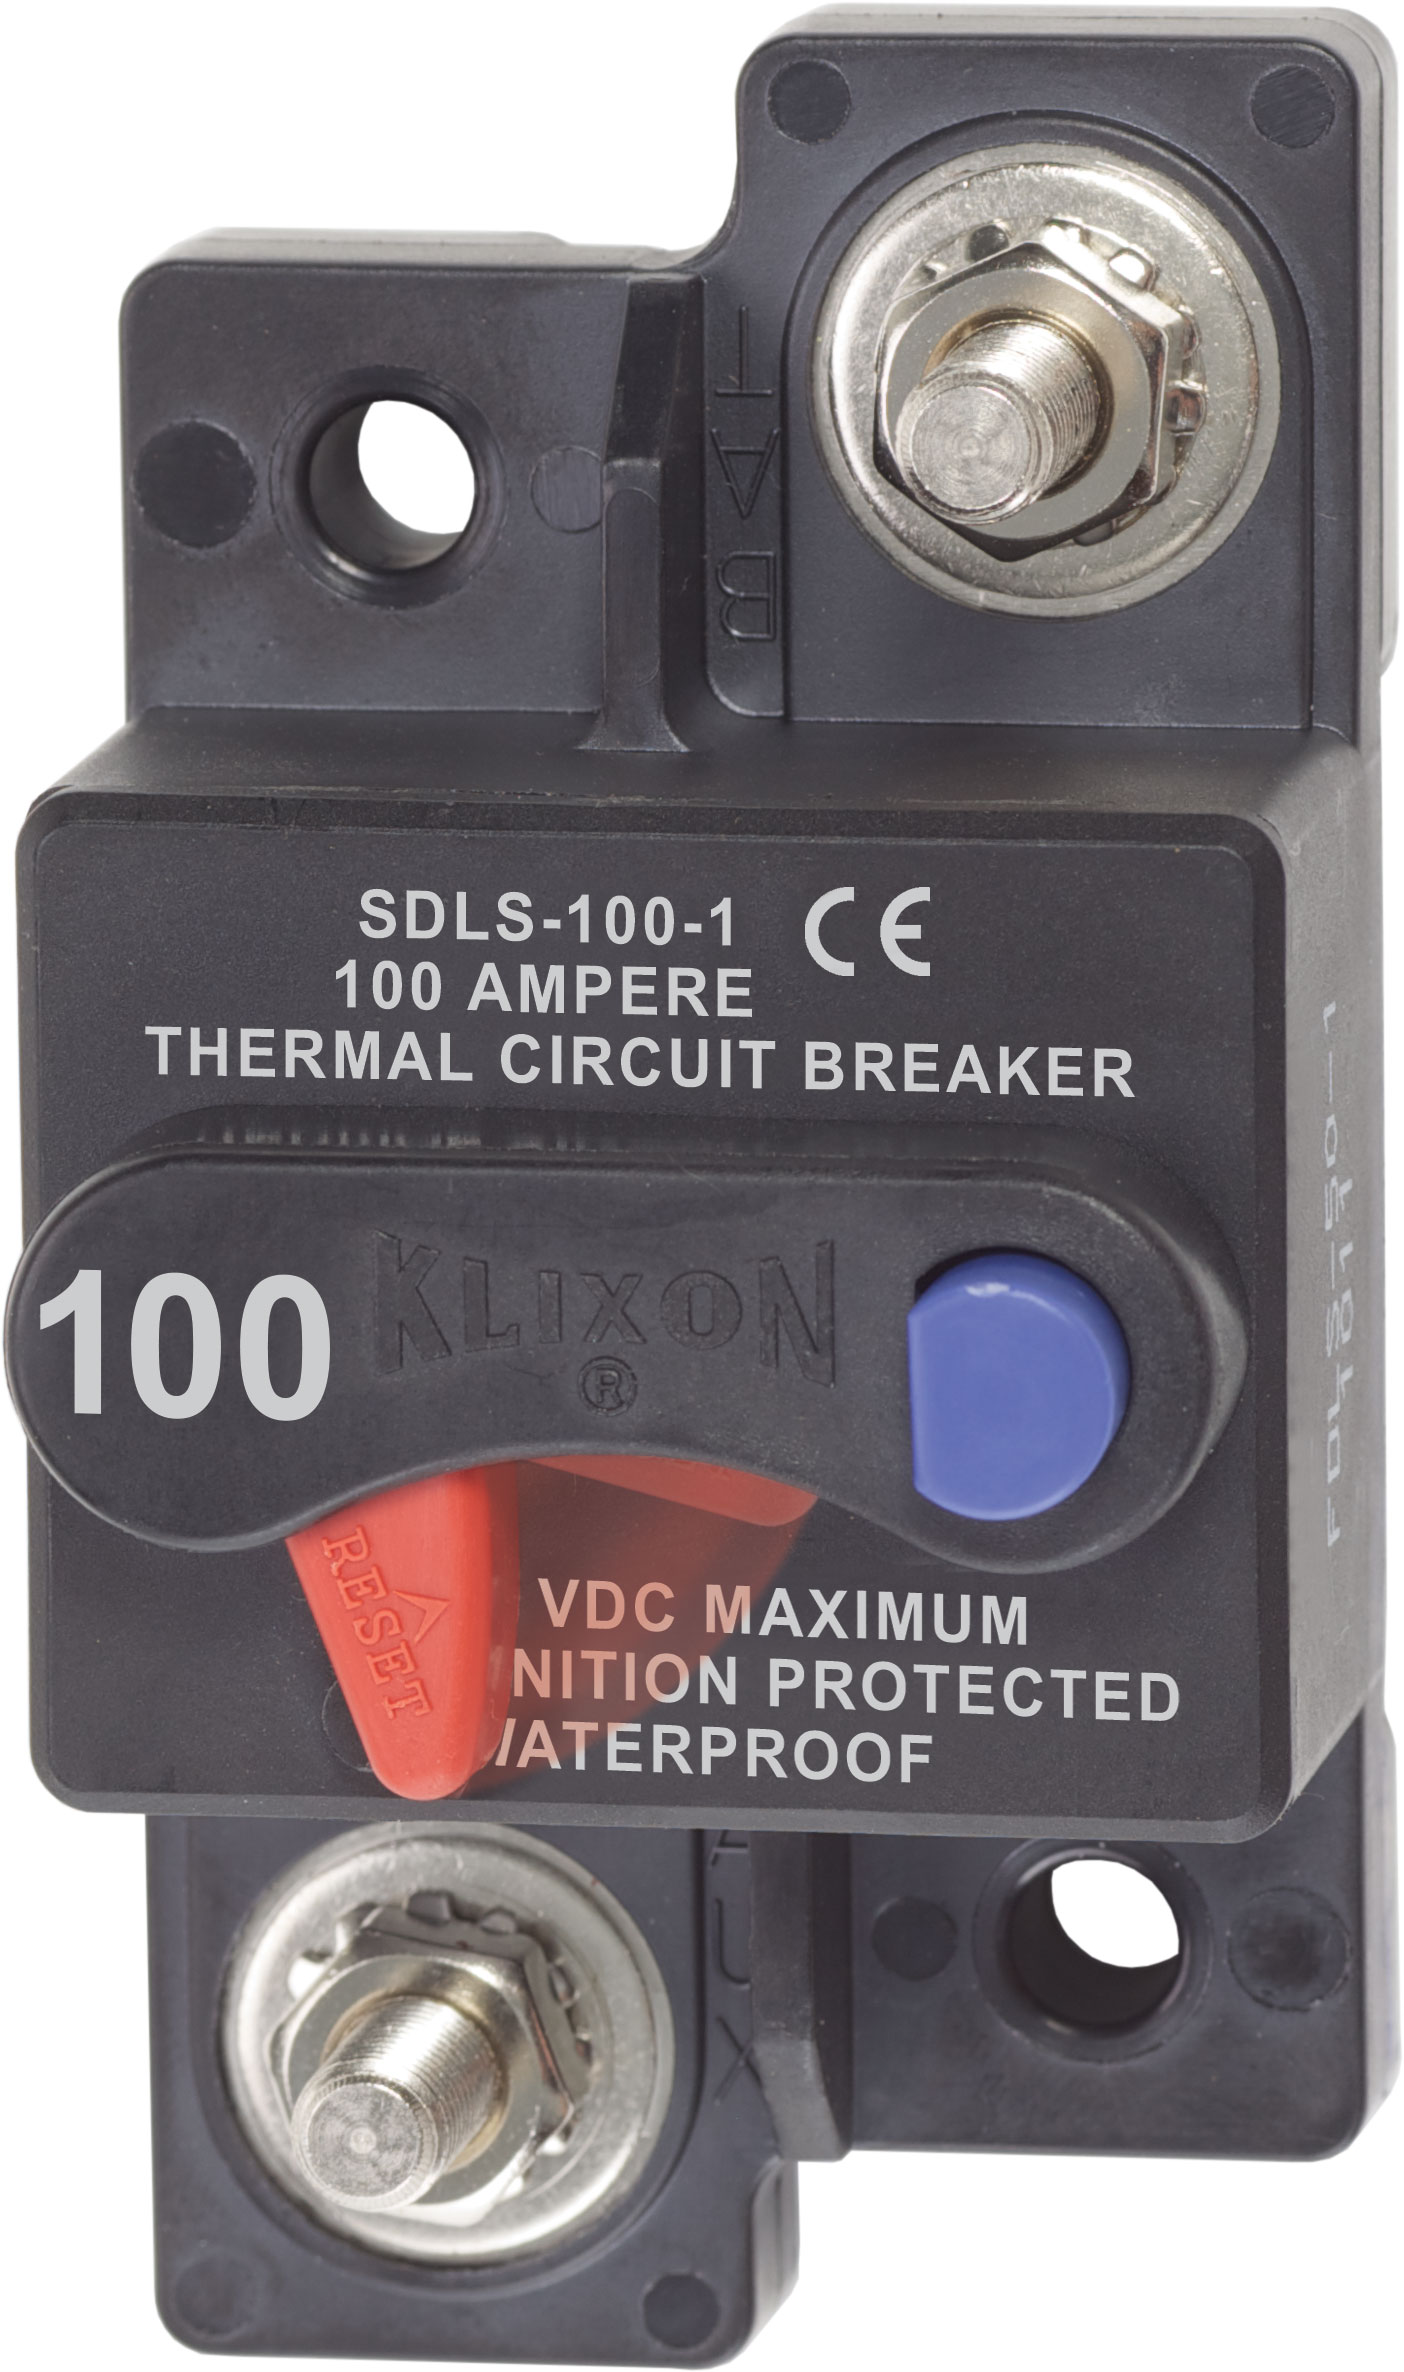 Part# 7177  Manufacturer Blue Sea Systems  Part Type Circuit Breaker